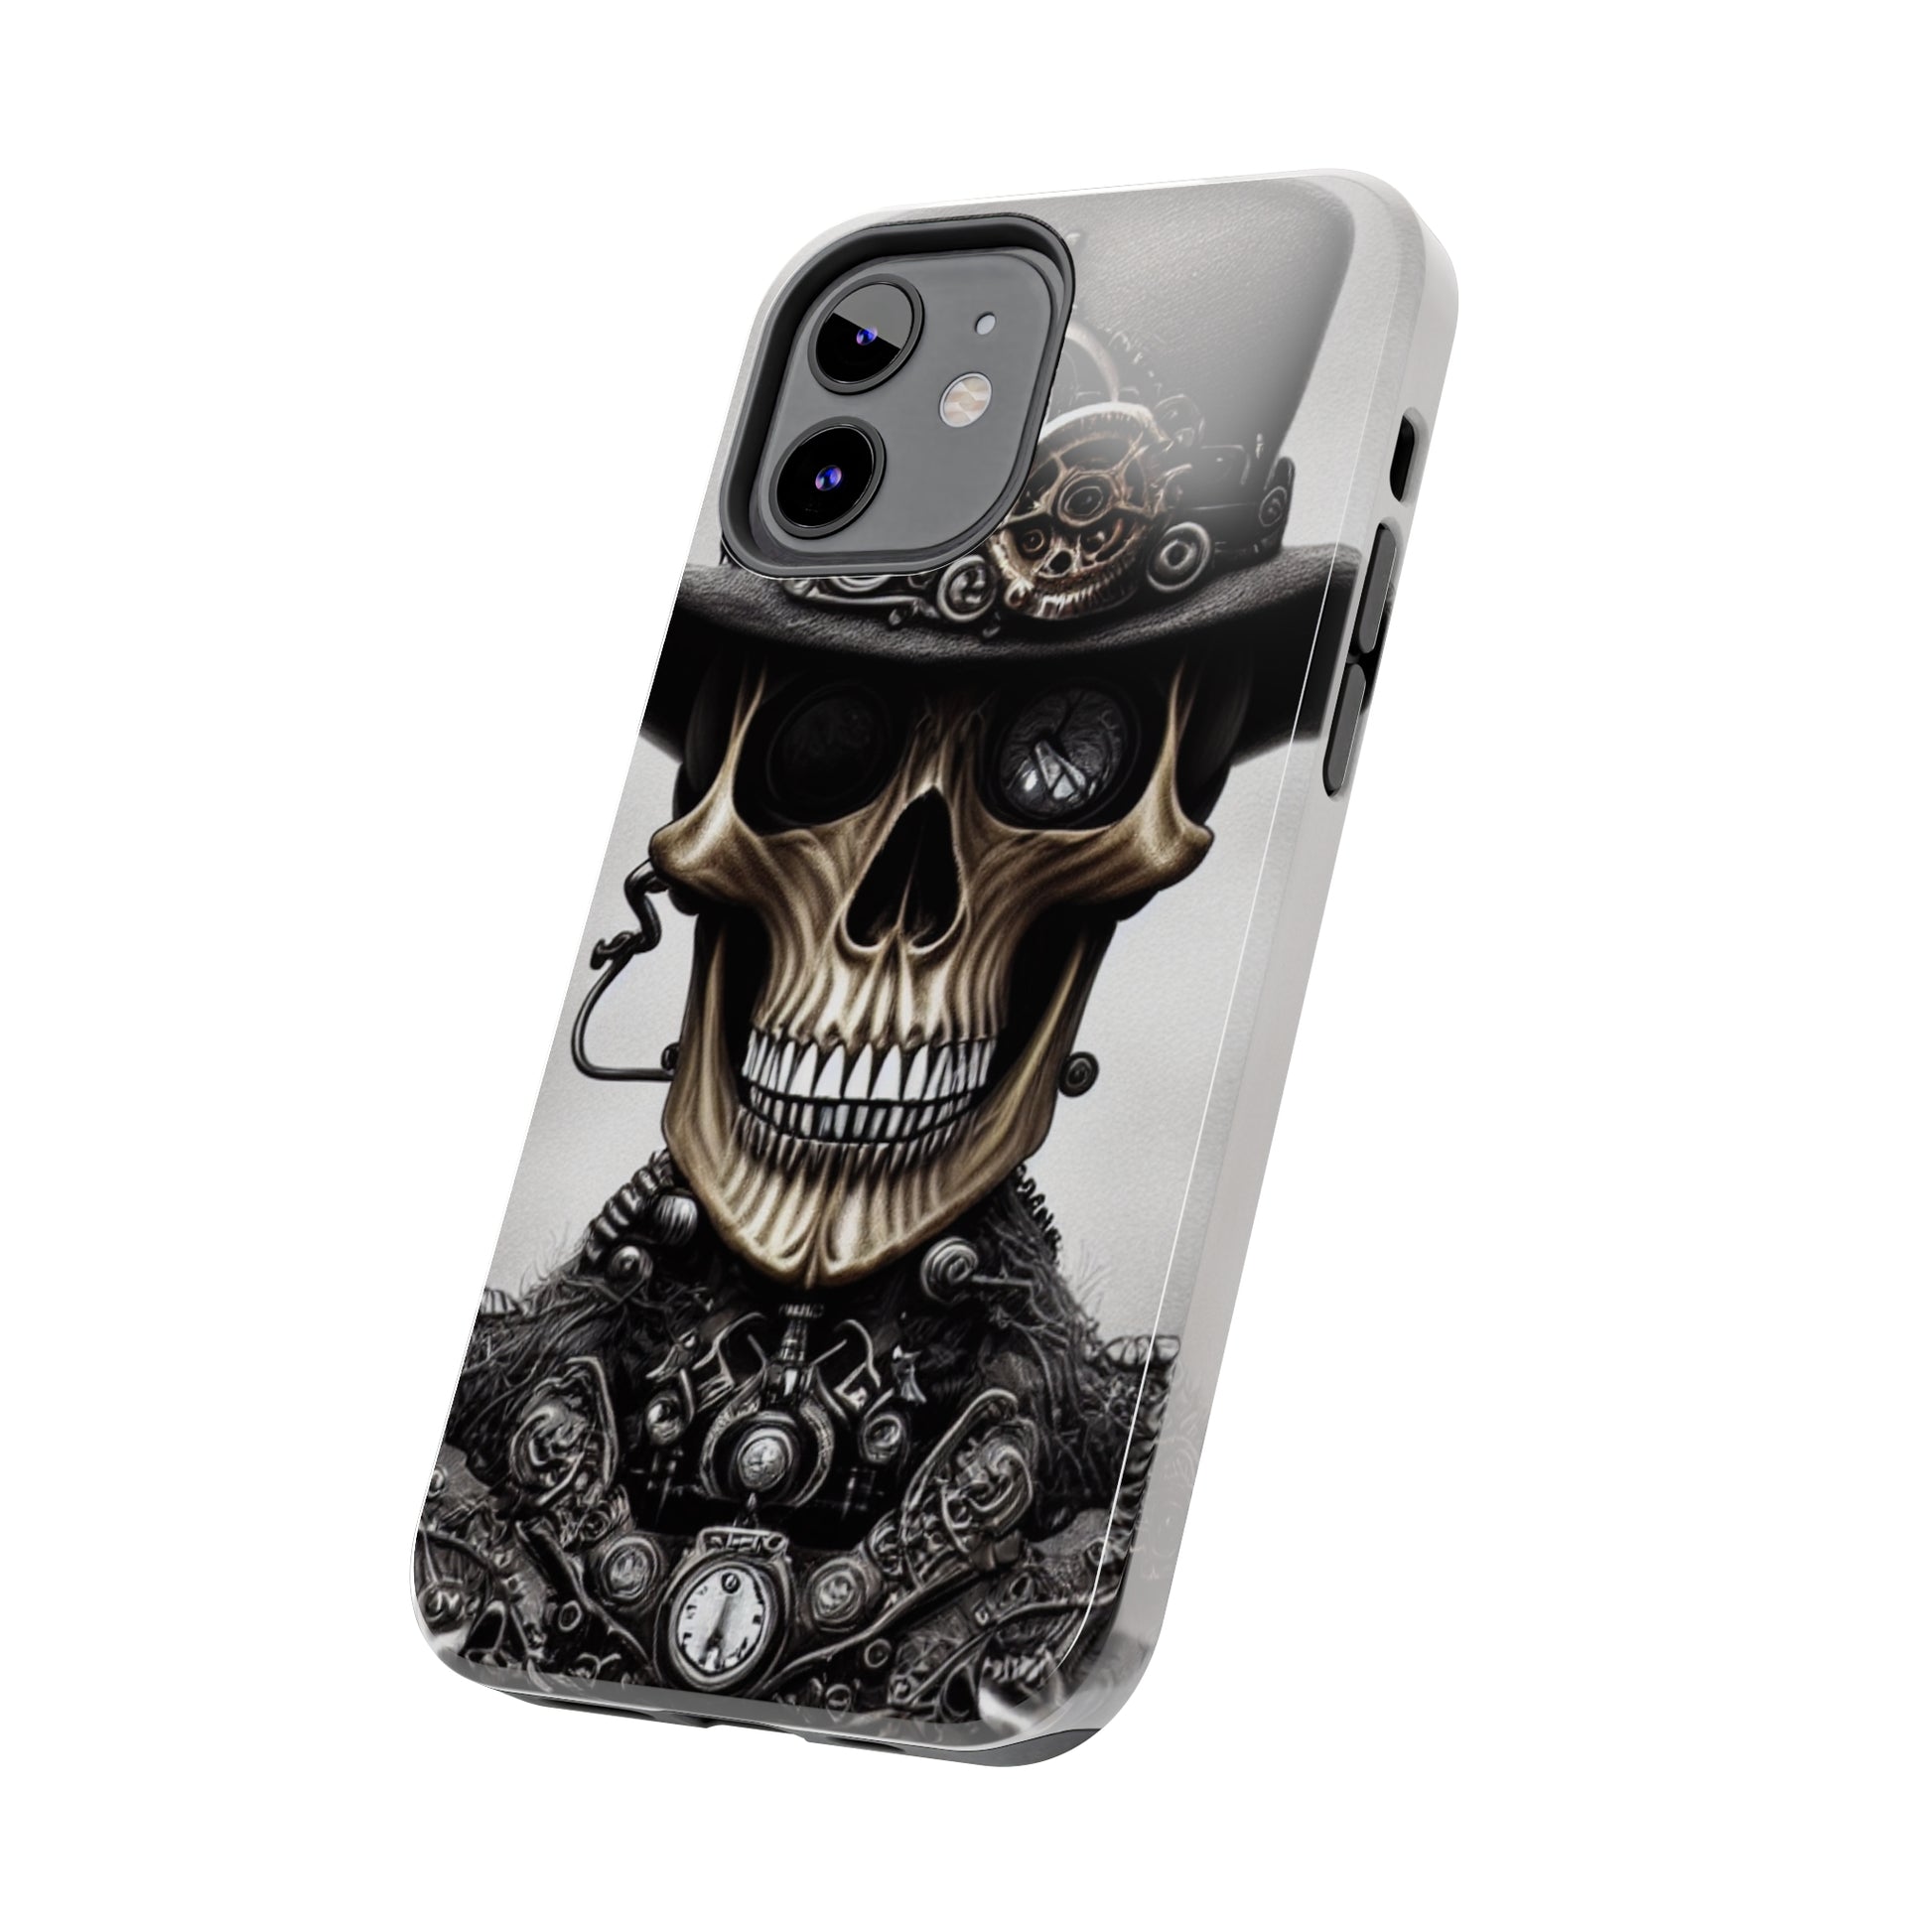 Steampunk Skull: iPhone Tough Case Design - Wireless Charging - Superior Protection - Original Designs by TheGlassyLass.com